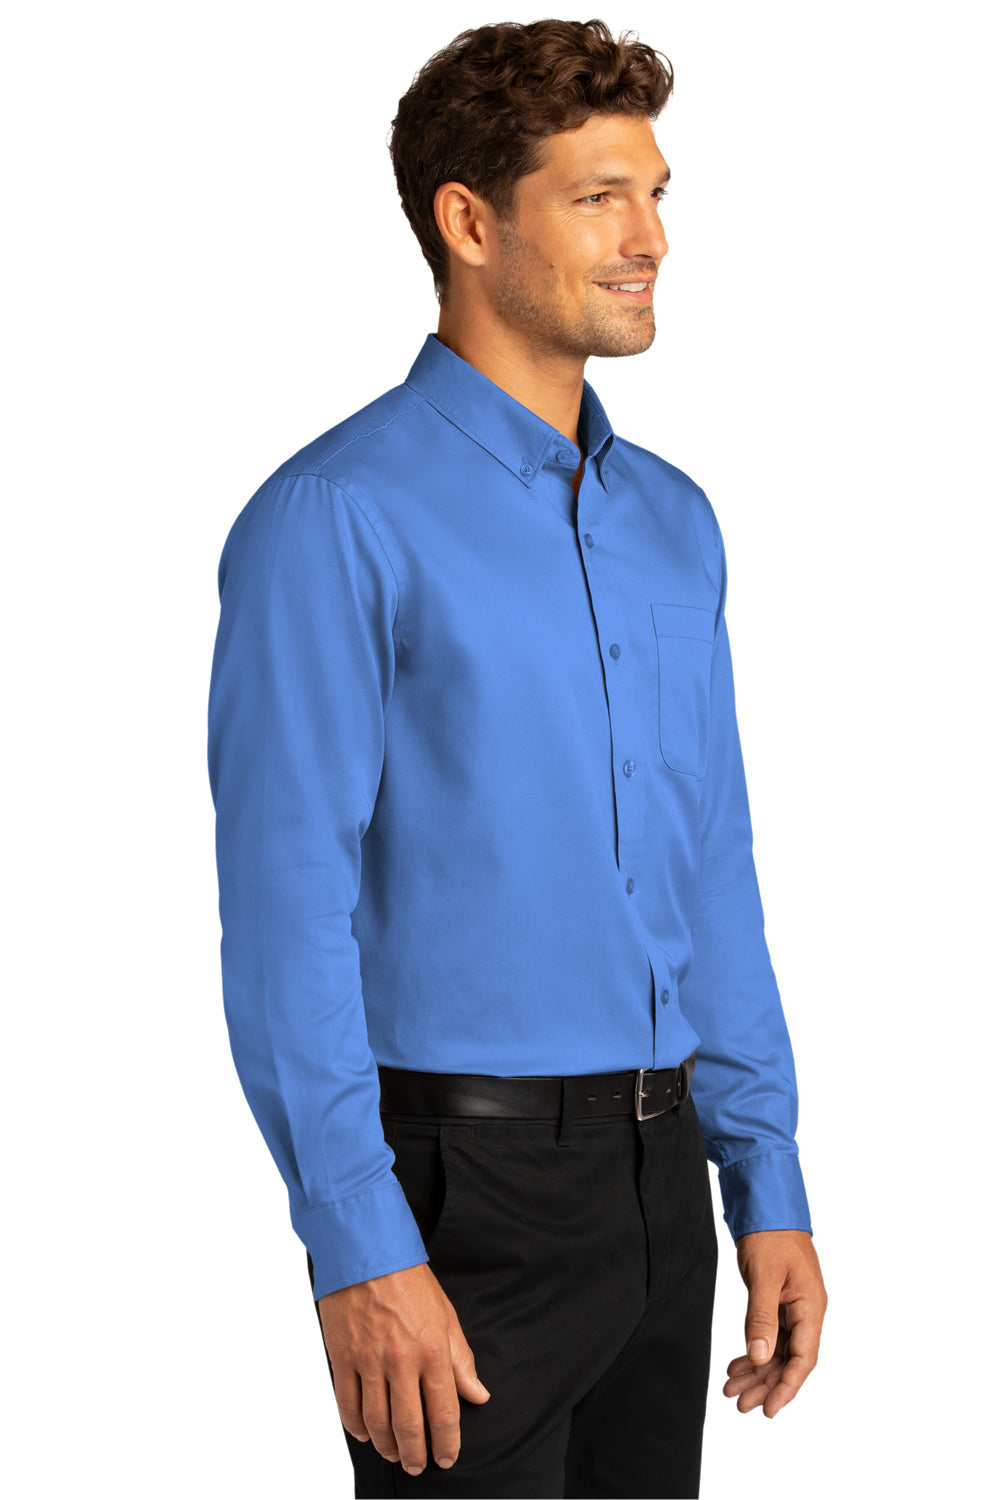 Port Authority W808 SuperPro Wrinkle Resistant React Long Sleeve Button Down Shirt w/ Pocket Ultramarine Blue 3Q